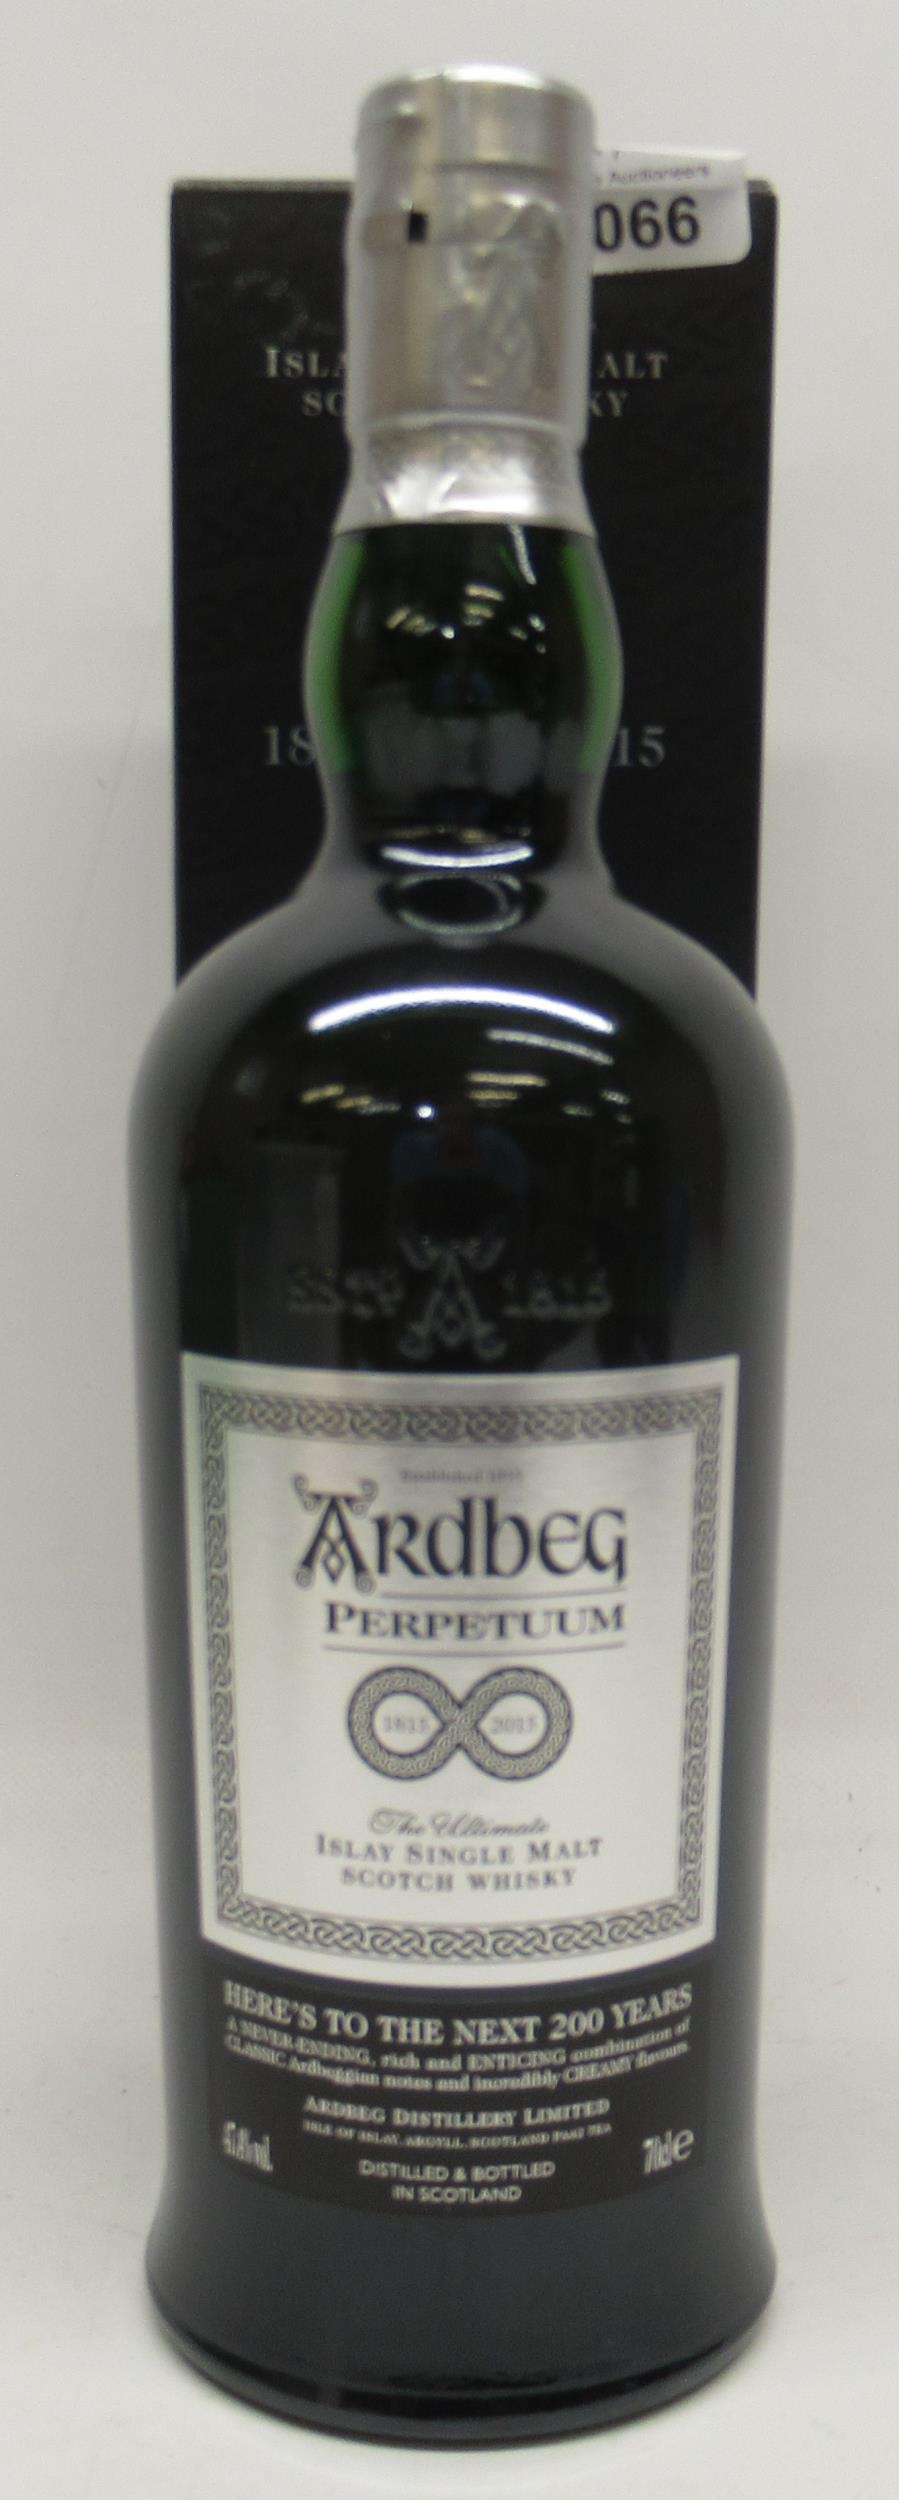 Ardbeg Distillery, Ardbeg Perpetuum 1815 - 2015, Islay single malt whisky, 47.4%, 70cl bottle